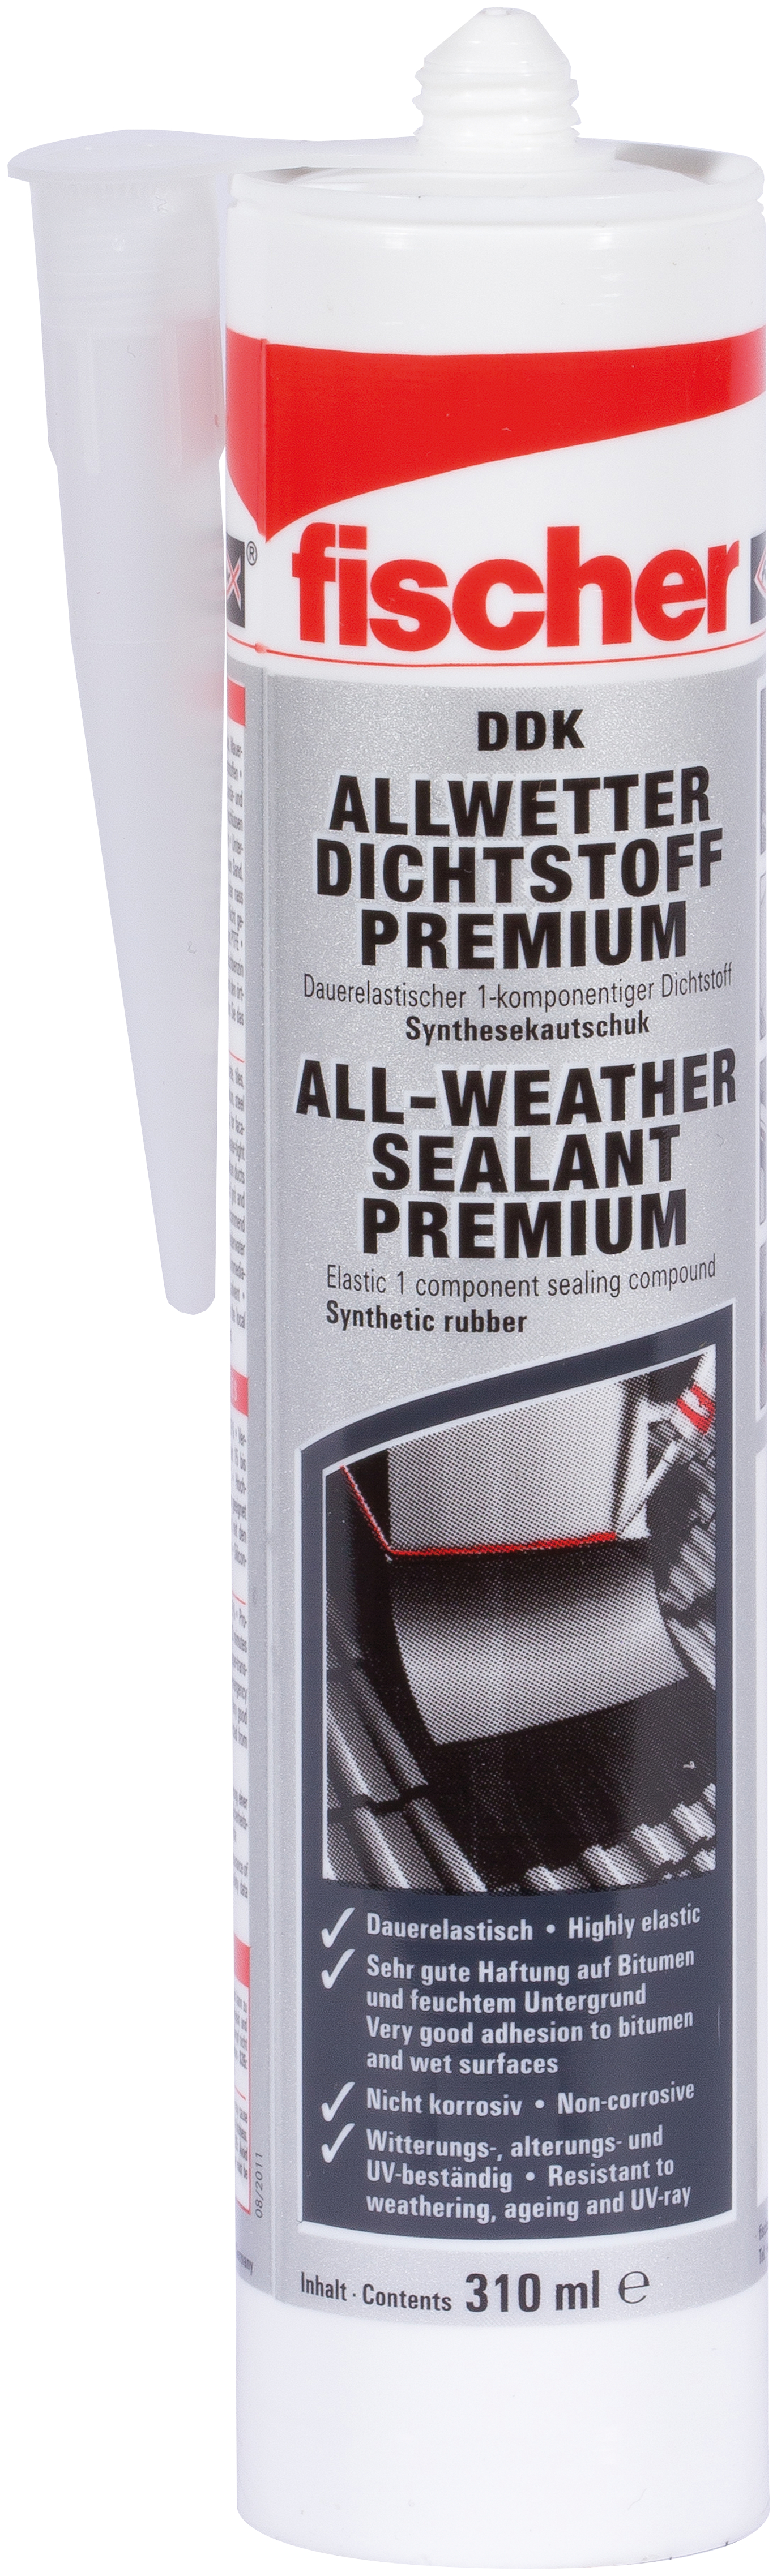 Premium all-weather sealant DDK